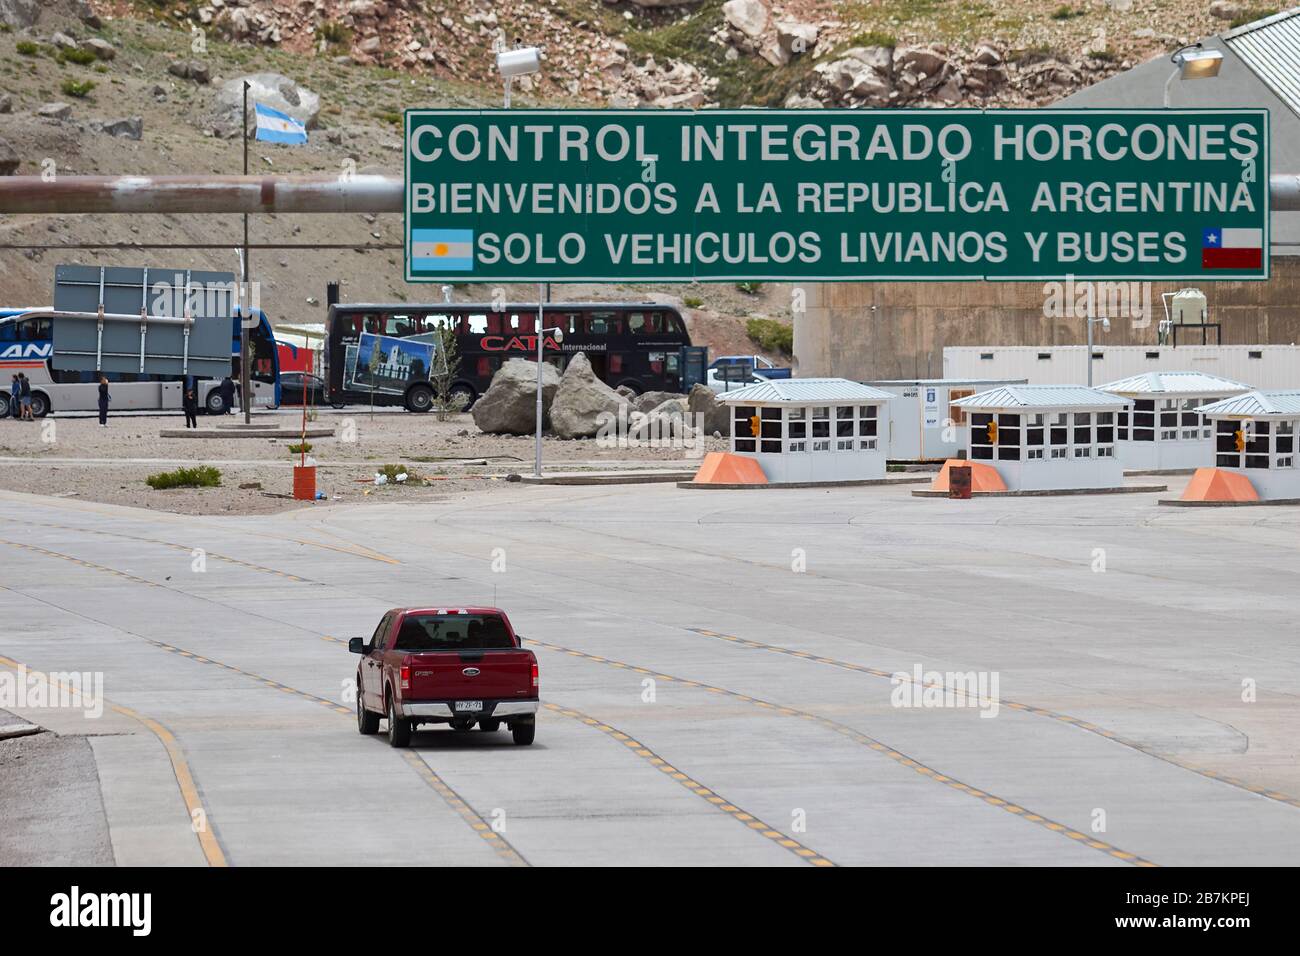 MENDOZA, ARGENTINA, June 10, 2015. Aduana Argentina,customs and migration control from Argentina, Horcones, Las Heras. Foto: Axel Lloret /  www.allofo Stock Photo